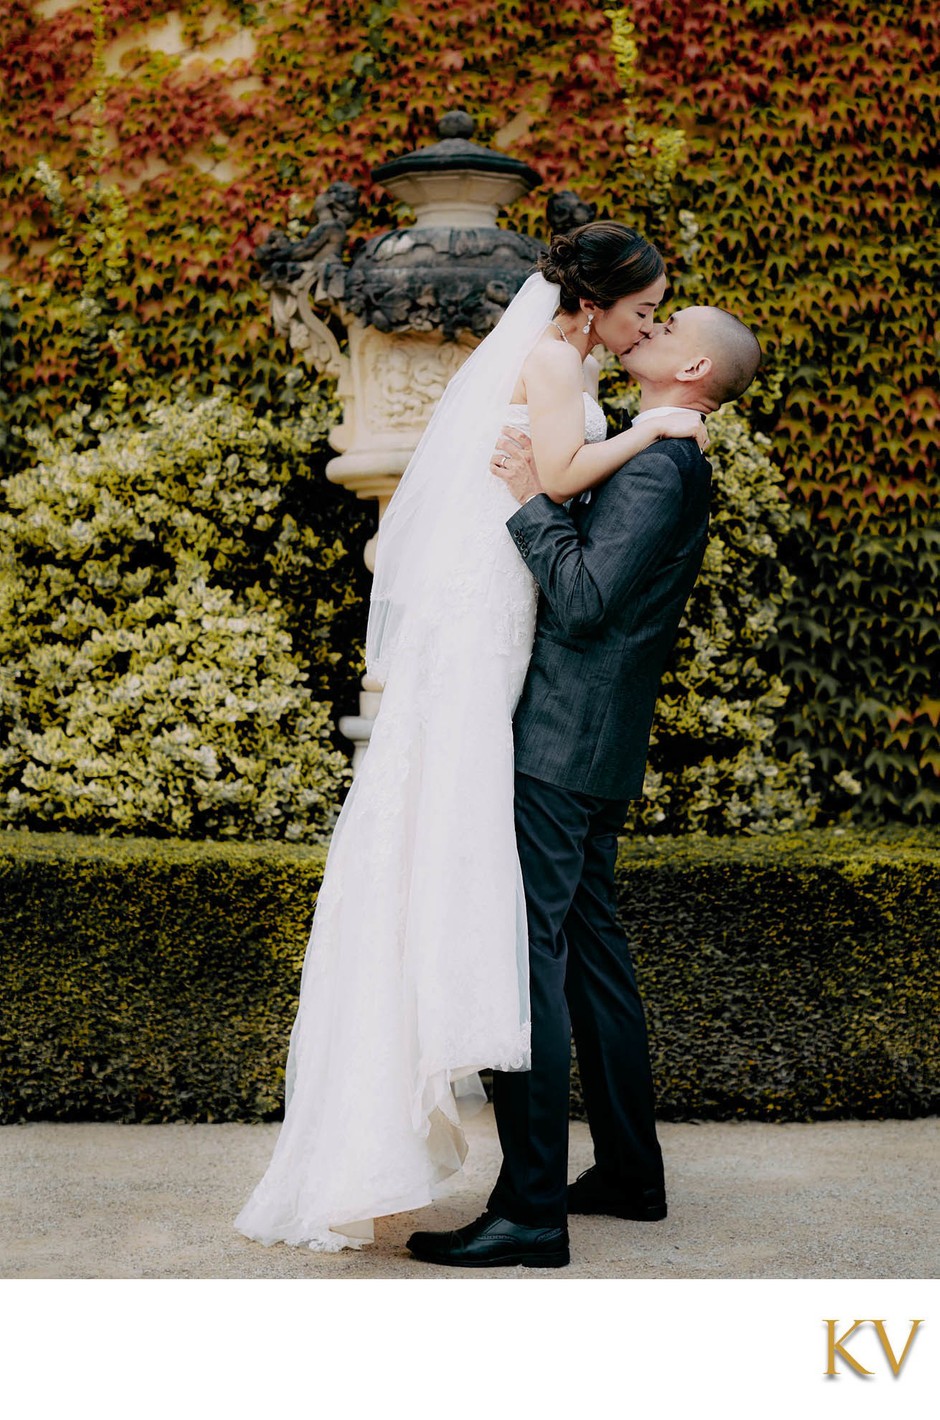 A kiss for his bride at the Vrtba garden